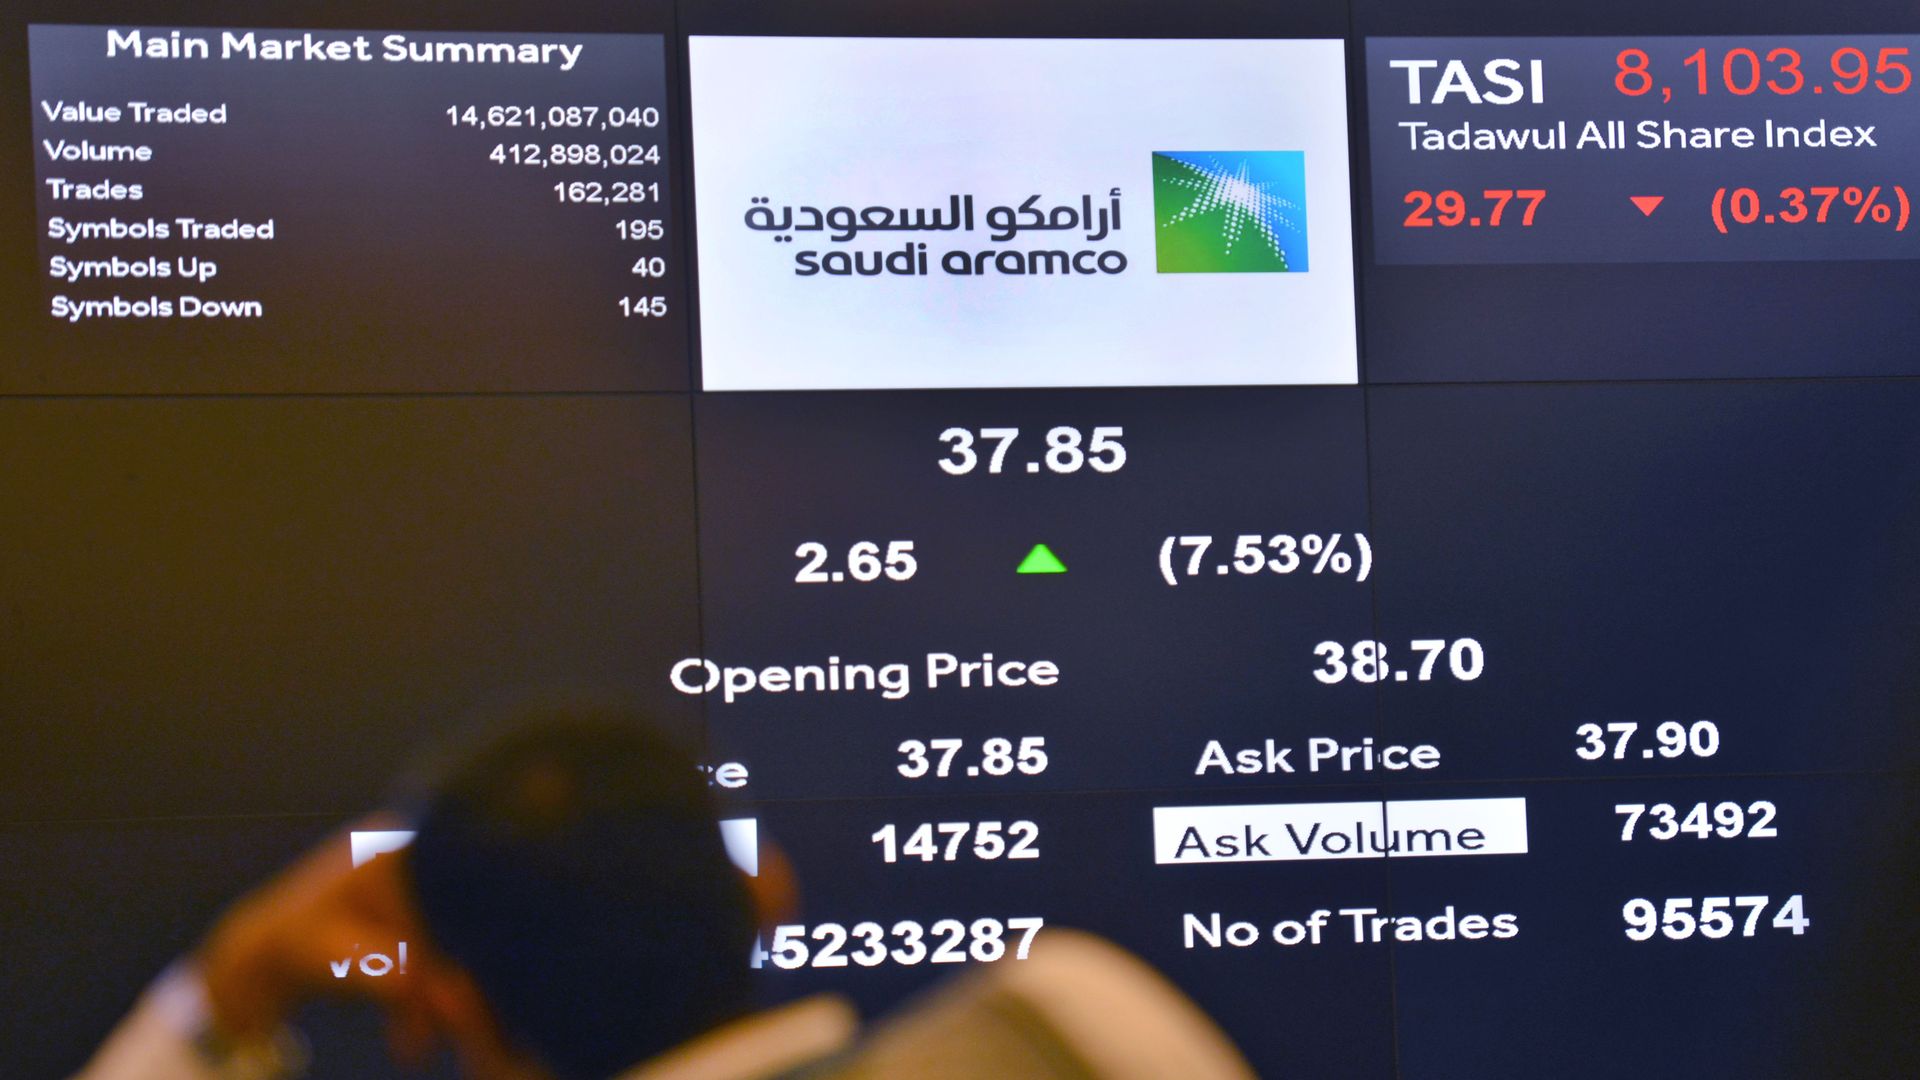 The Saudi Aramco stock chart.